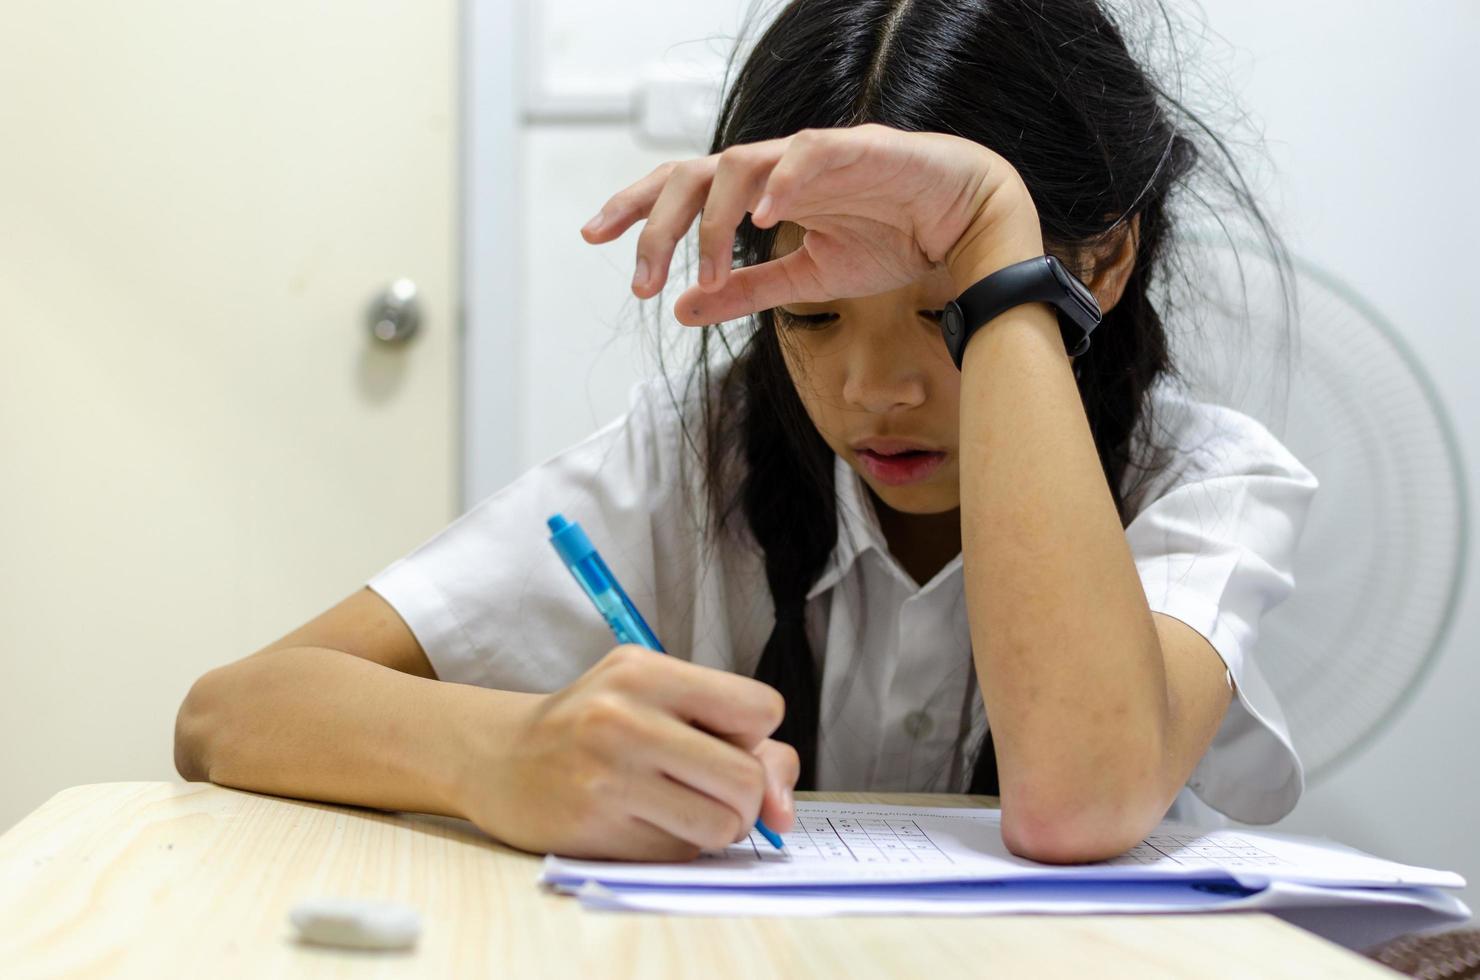 School girl doing homework photo